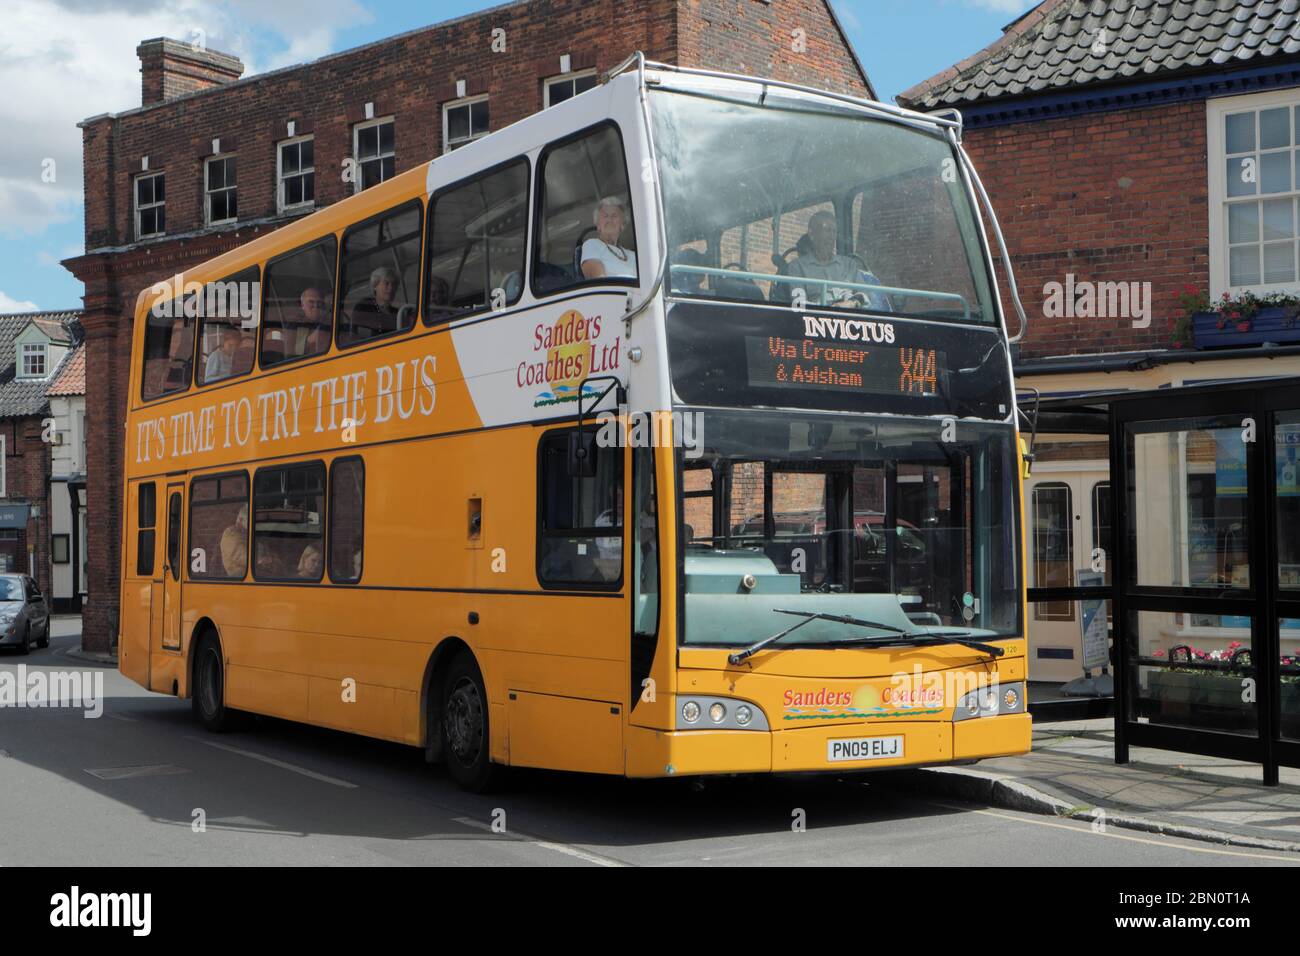 Holt - Norwich rotta x44 bus in attesa in Aylsham Norfolk Inghilterra UK Foto Stock